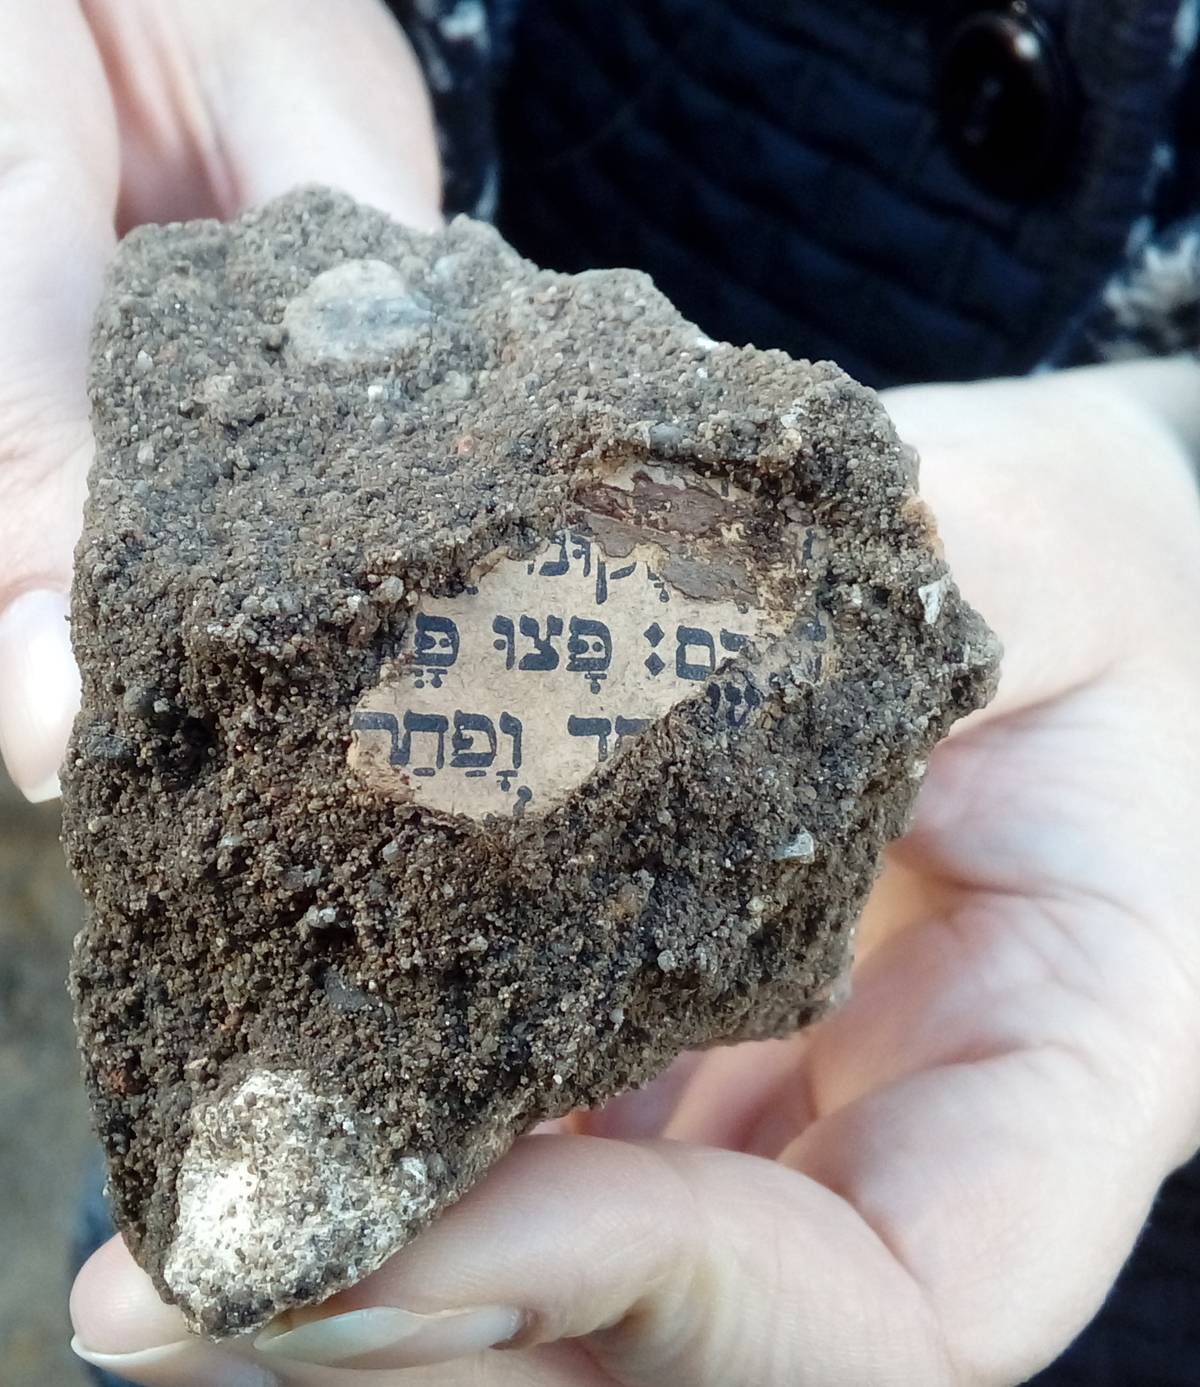 An artifact found during a 2017 excavation at Wrocław cemetery. (Photo: Jerzy Kichler/courtesy of Jerzy Kichler)